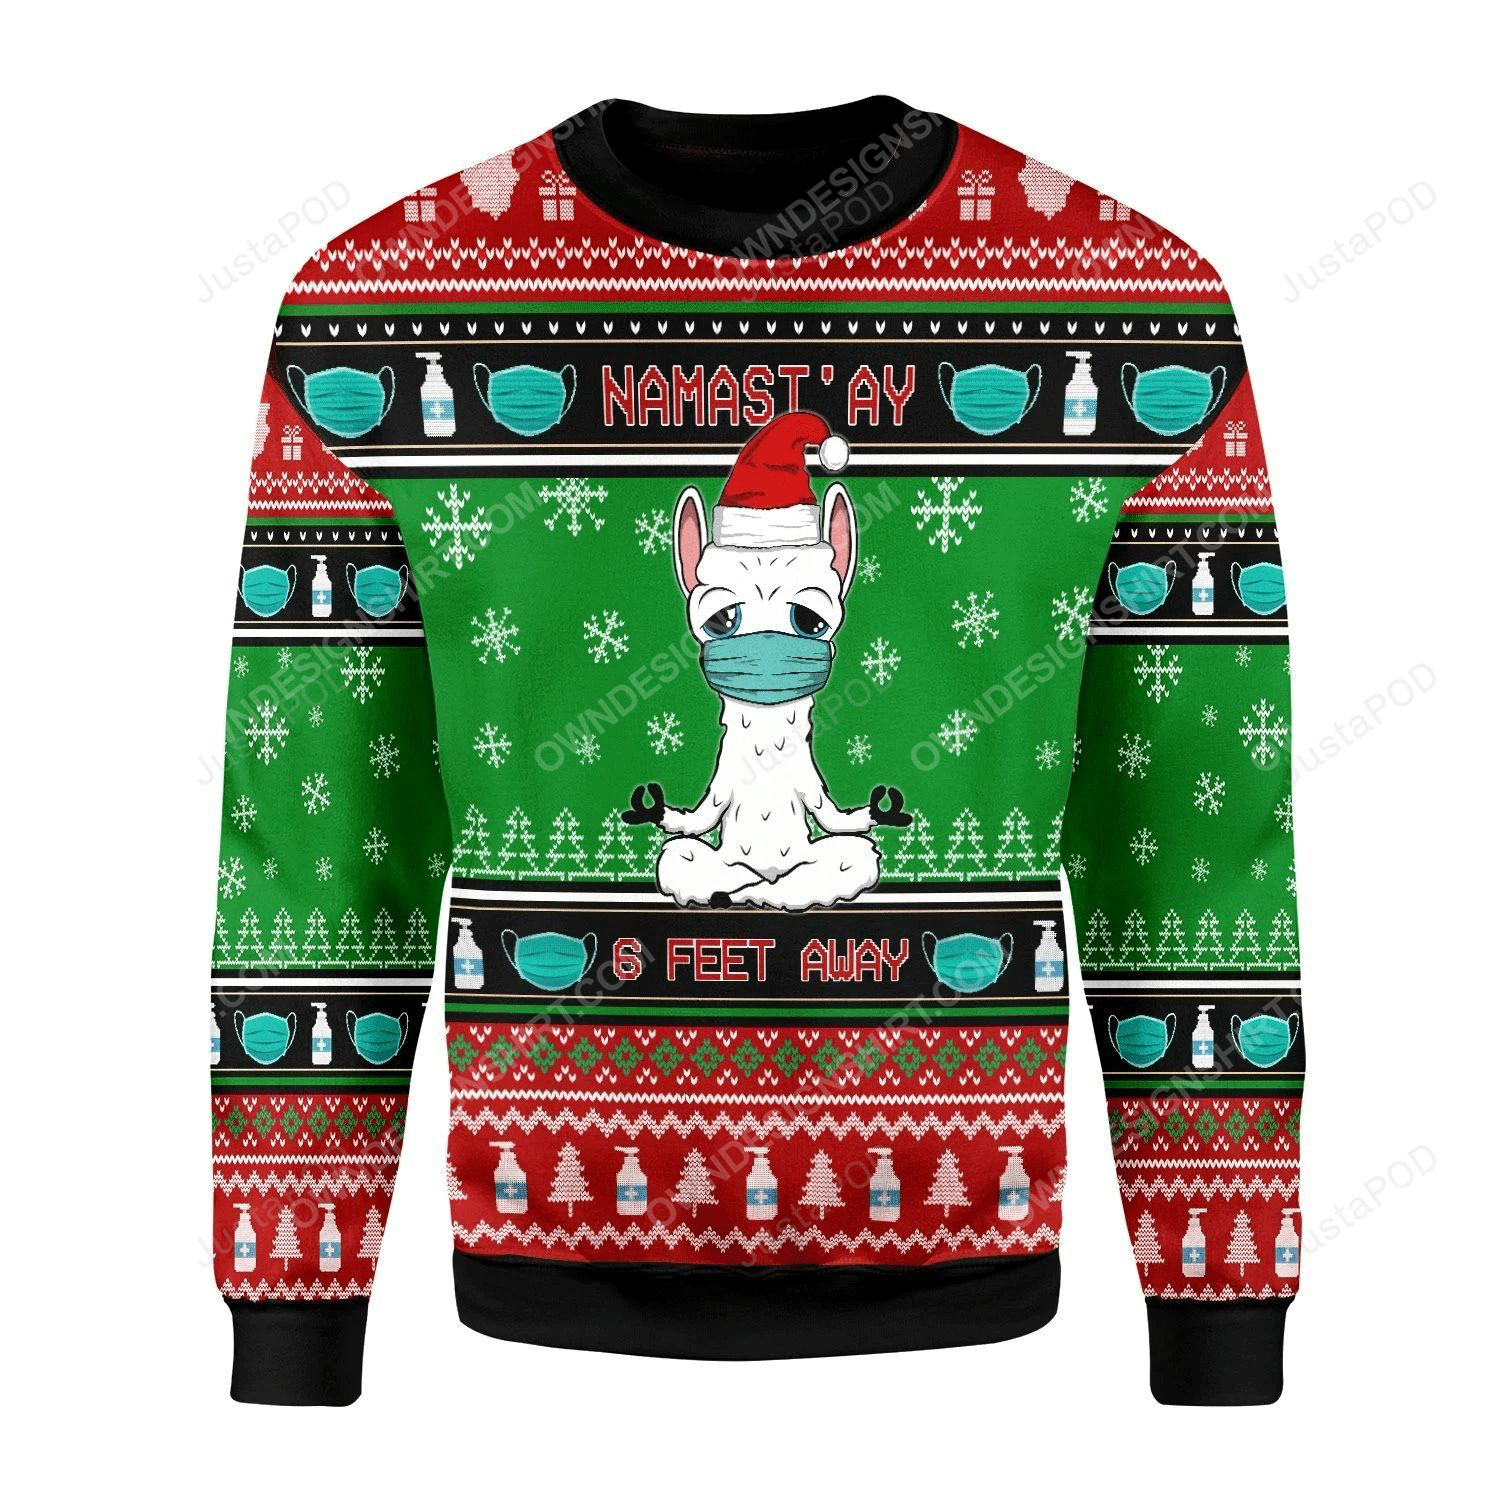 Llama namaste stay 6 feet away ugly christmas sweater